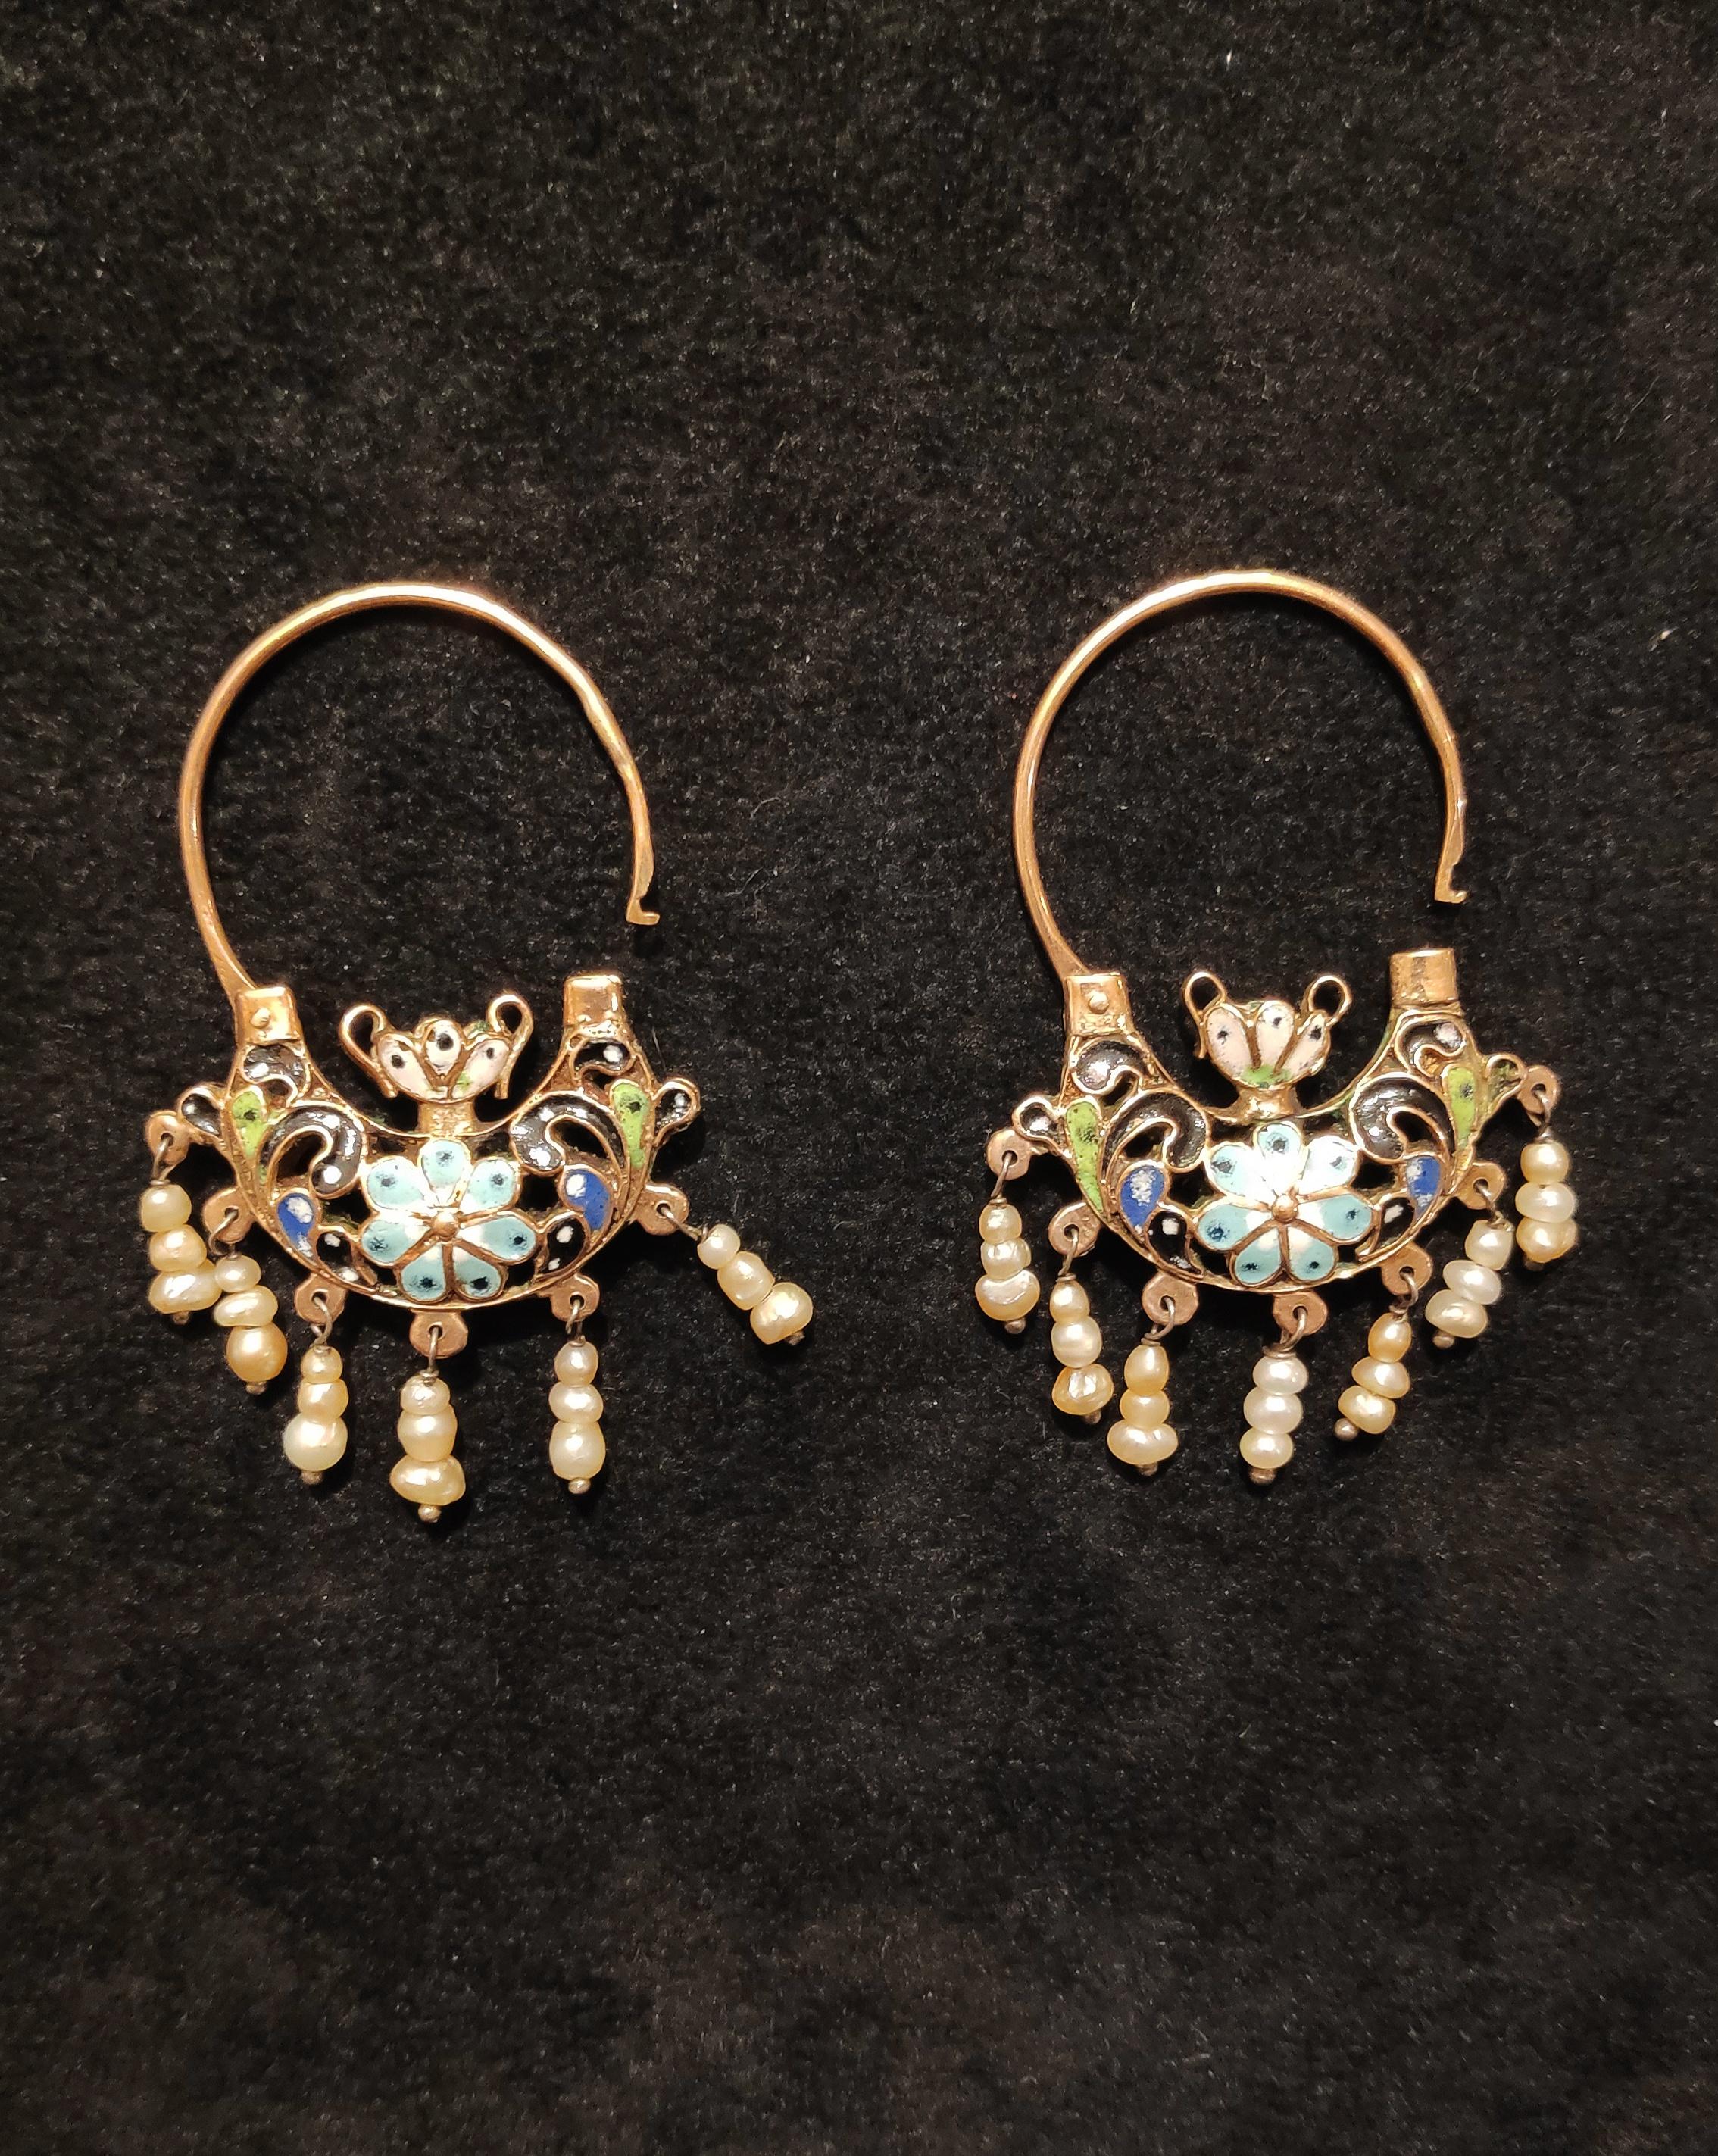 Pair of antique earrings called 